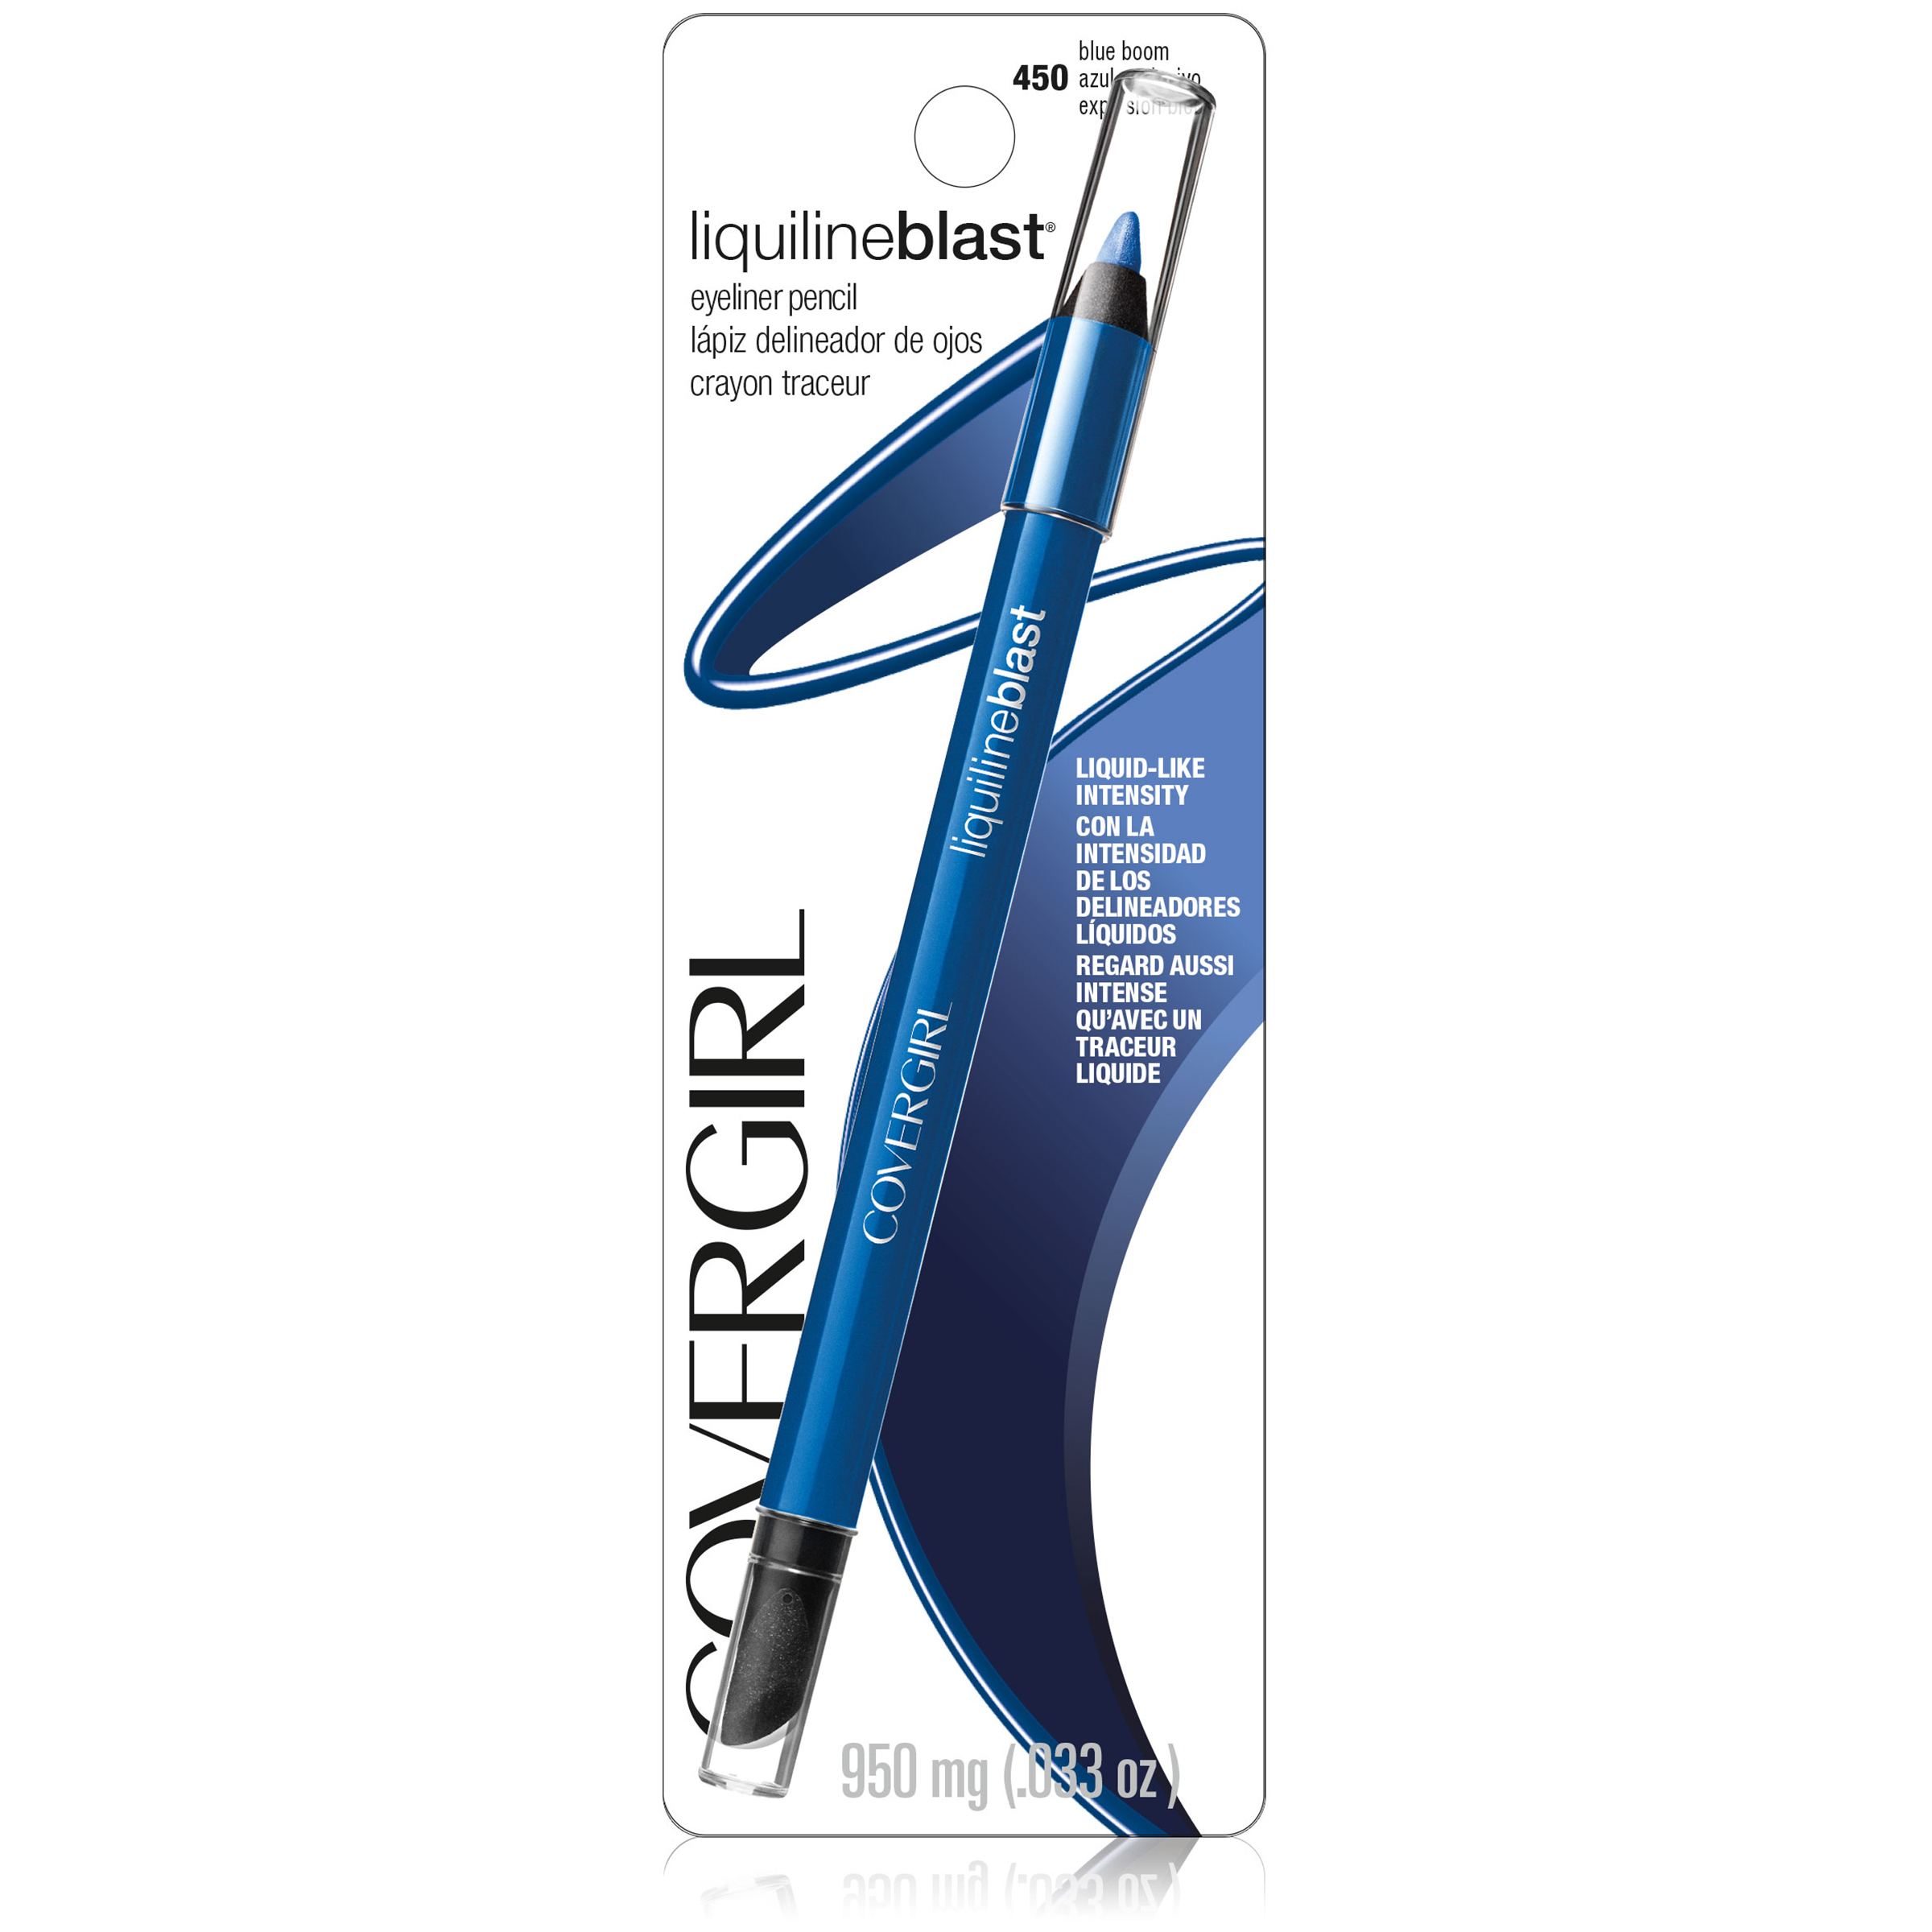 CoverGirl Liquilineblast Eyeliner Pencil